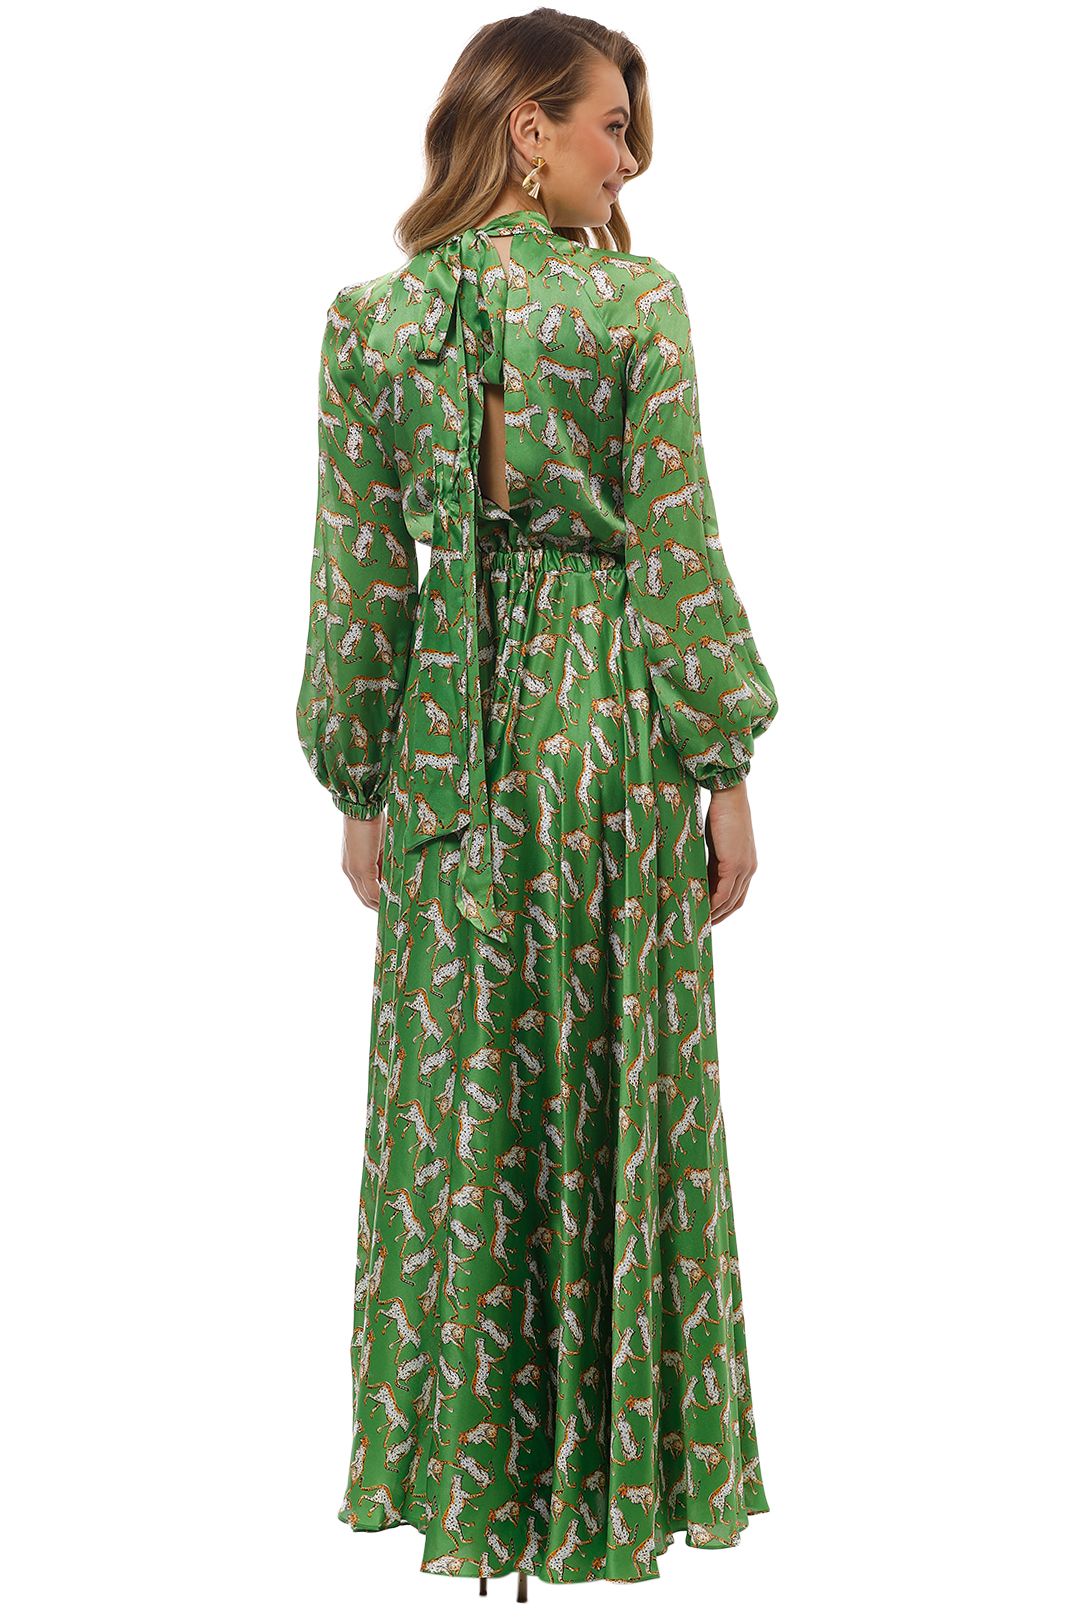 Milly - Emmie Dress - Emerald - Back